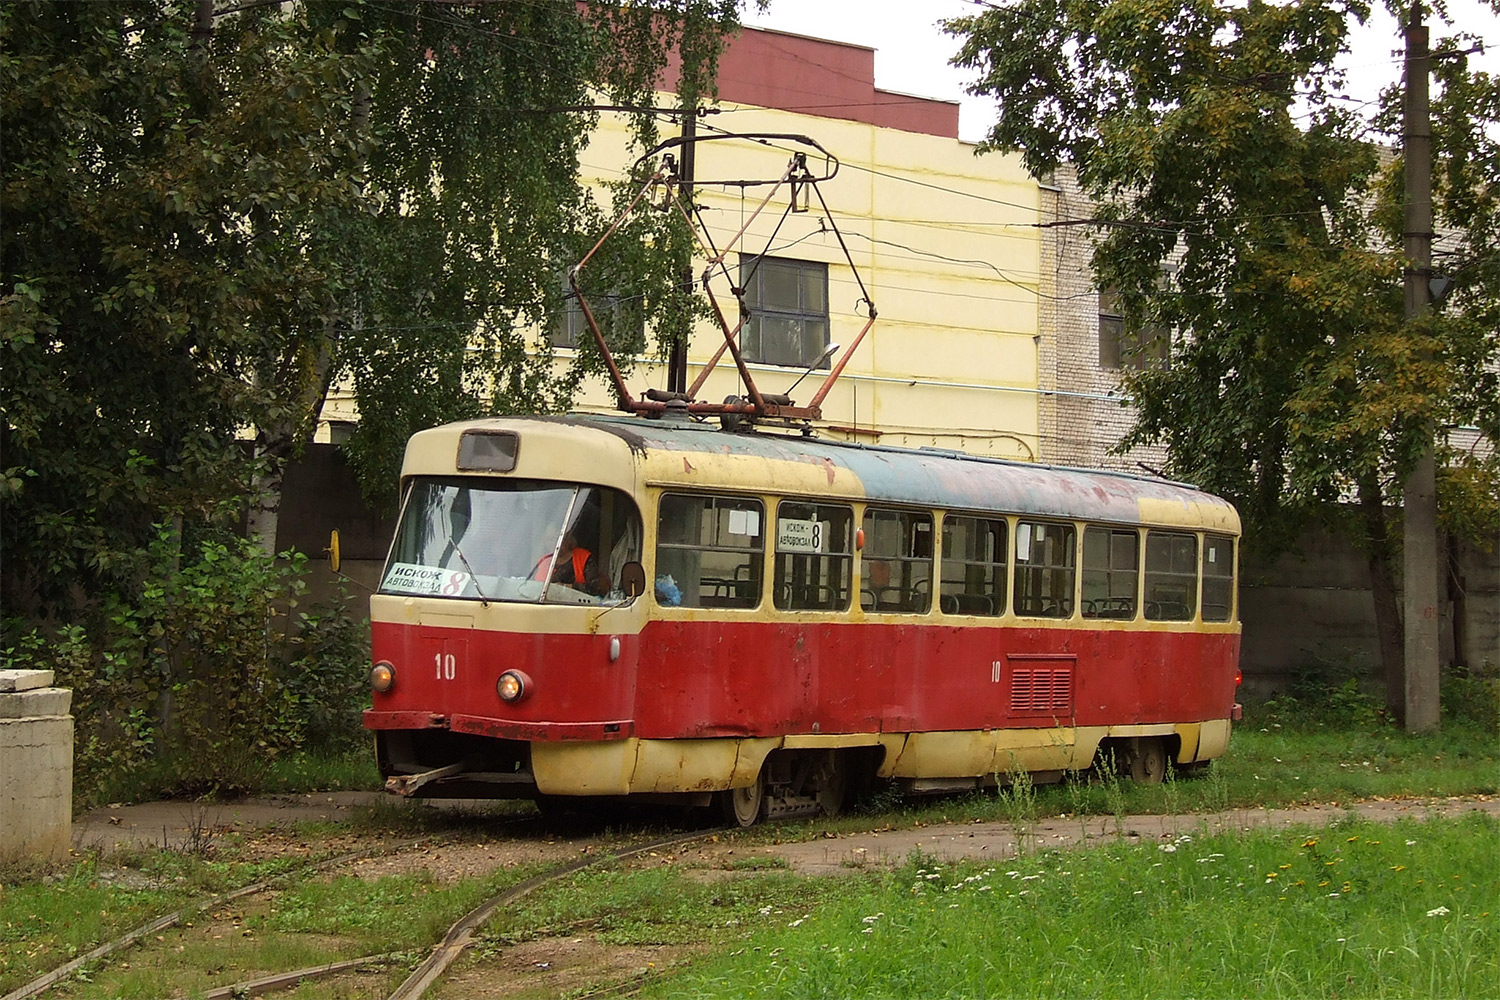 Tver, Tatra T3SU — 10; Tver — Tver tramway in the early 2000s (2002 — 2006)